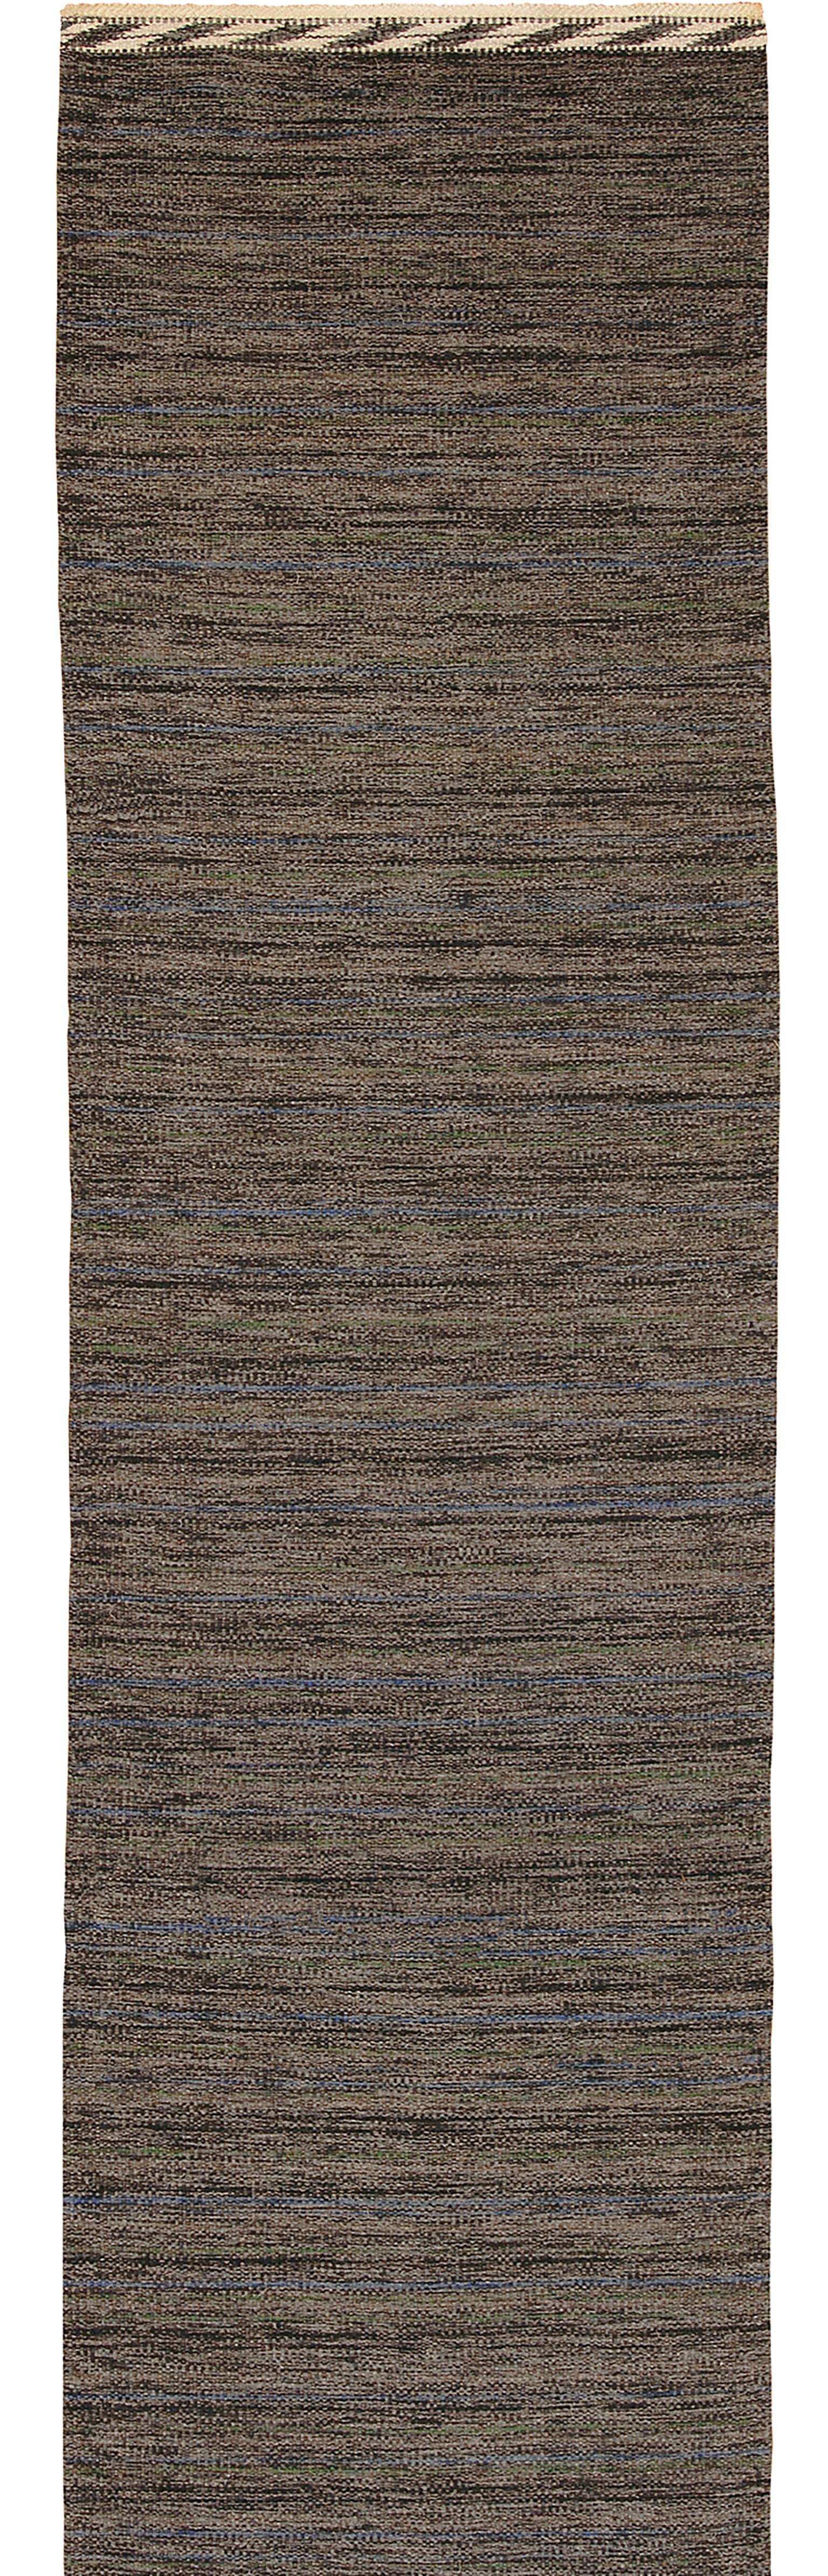 Swedish flat weave rug
Sweden, circa 1950
Handwoven